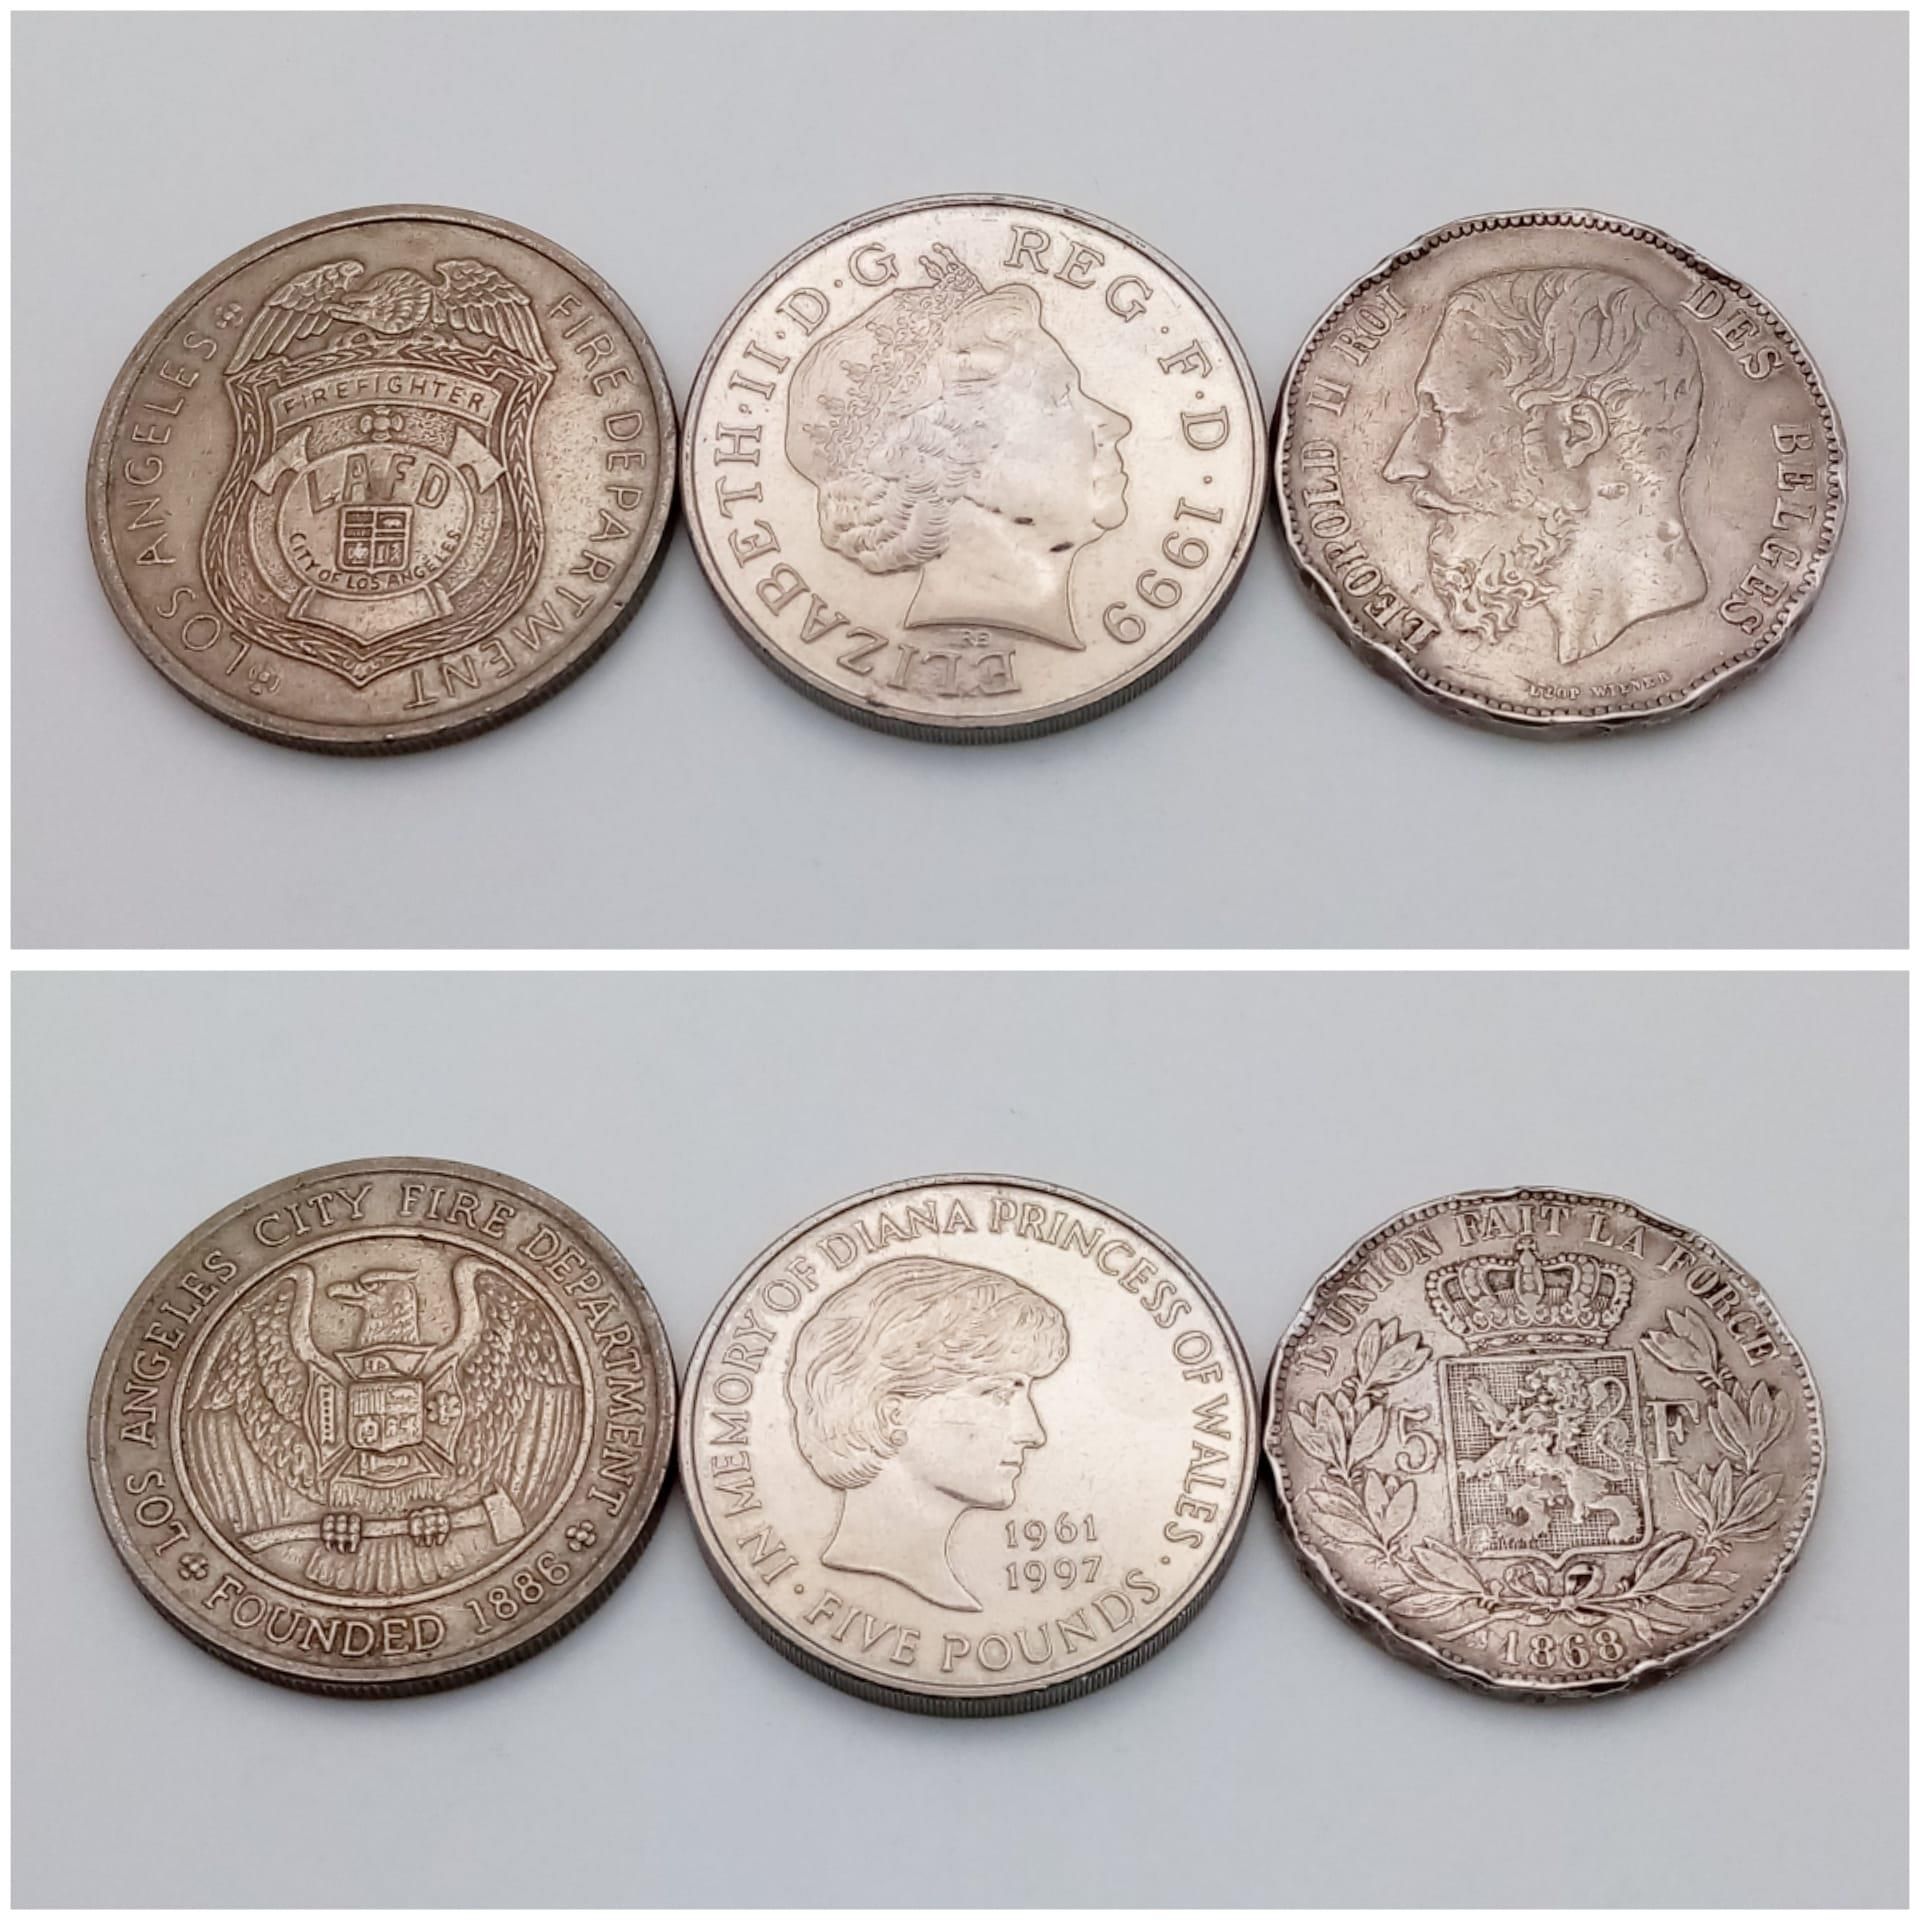 Three Interesting Coins: An 1868 Silver Belgium King Leopold 5 Franc Coin (damaged at edges), an